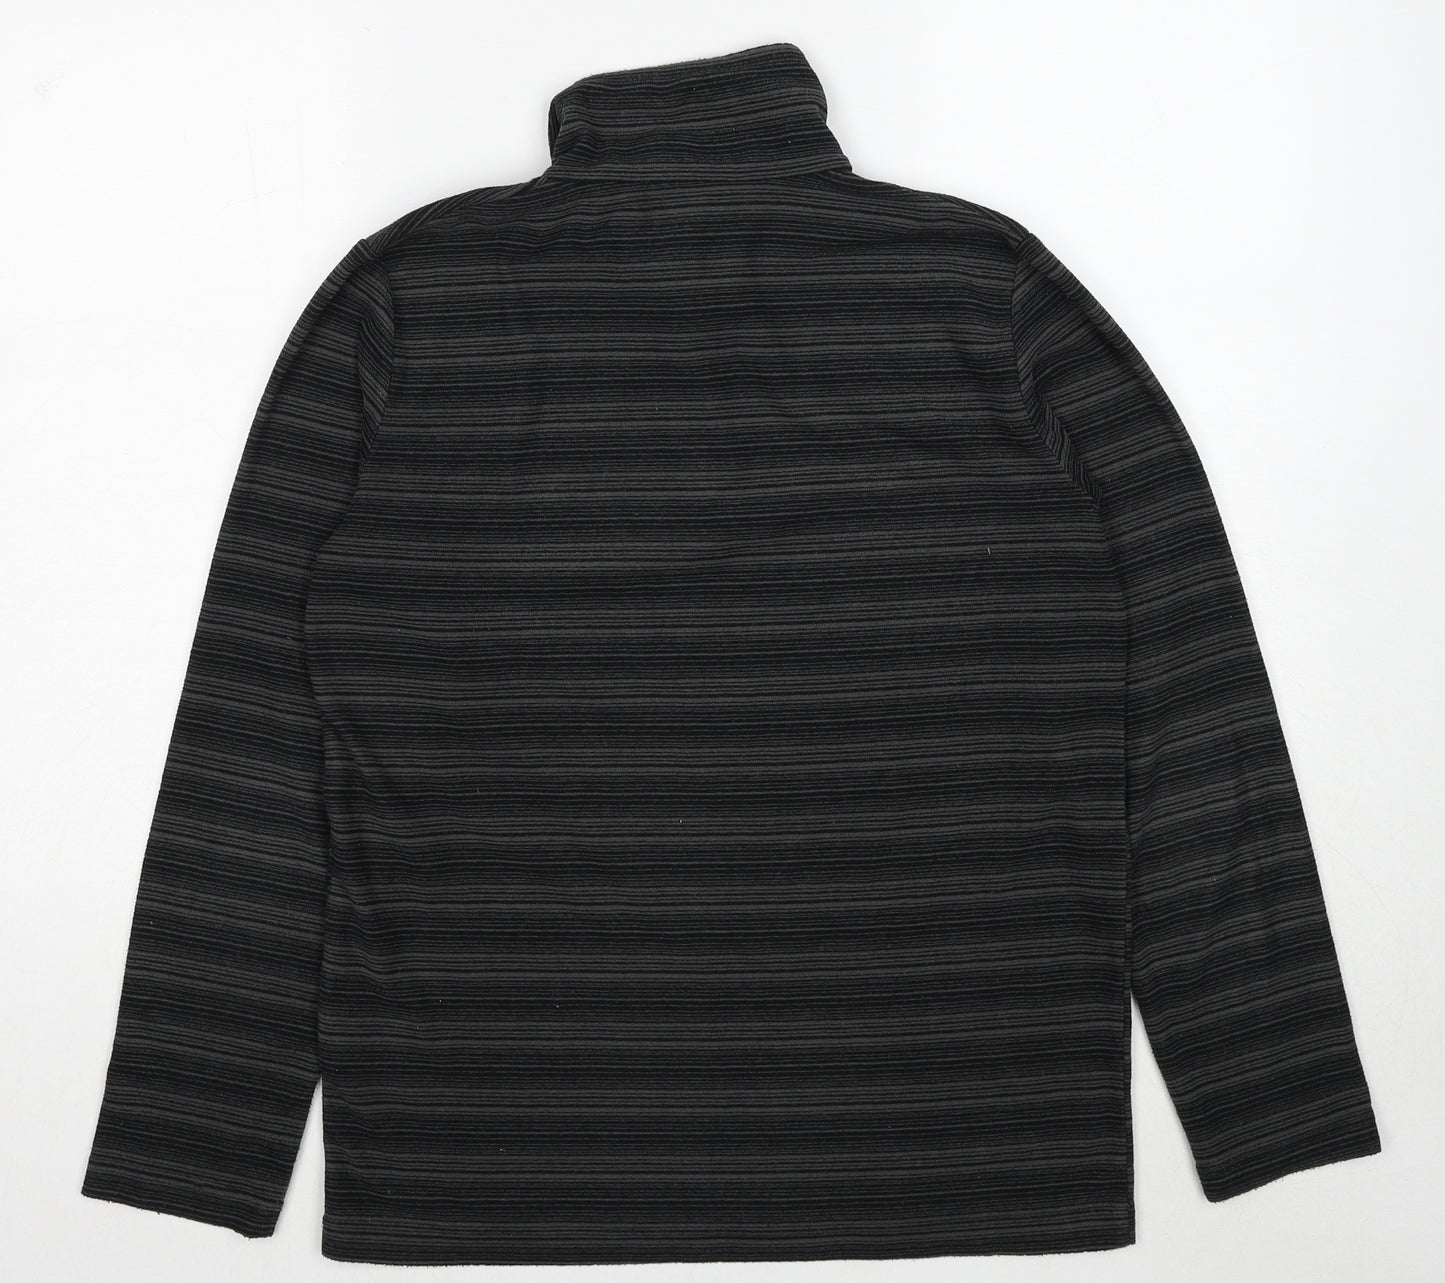 Hi Gear Mens Black Striped Polyester Pullover Sweatshirt Size XS